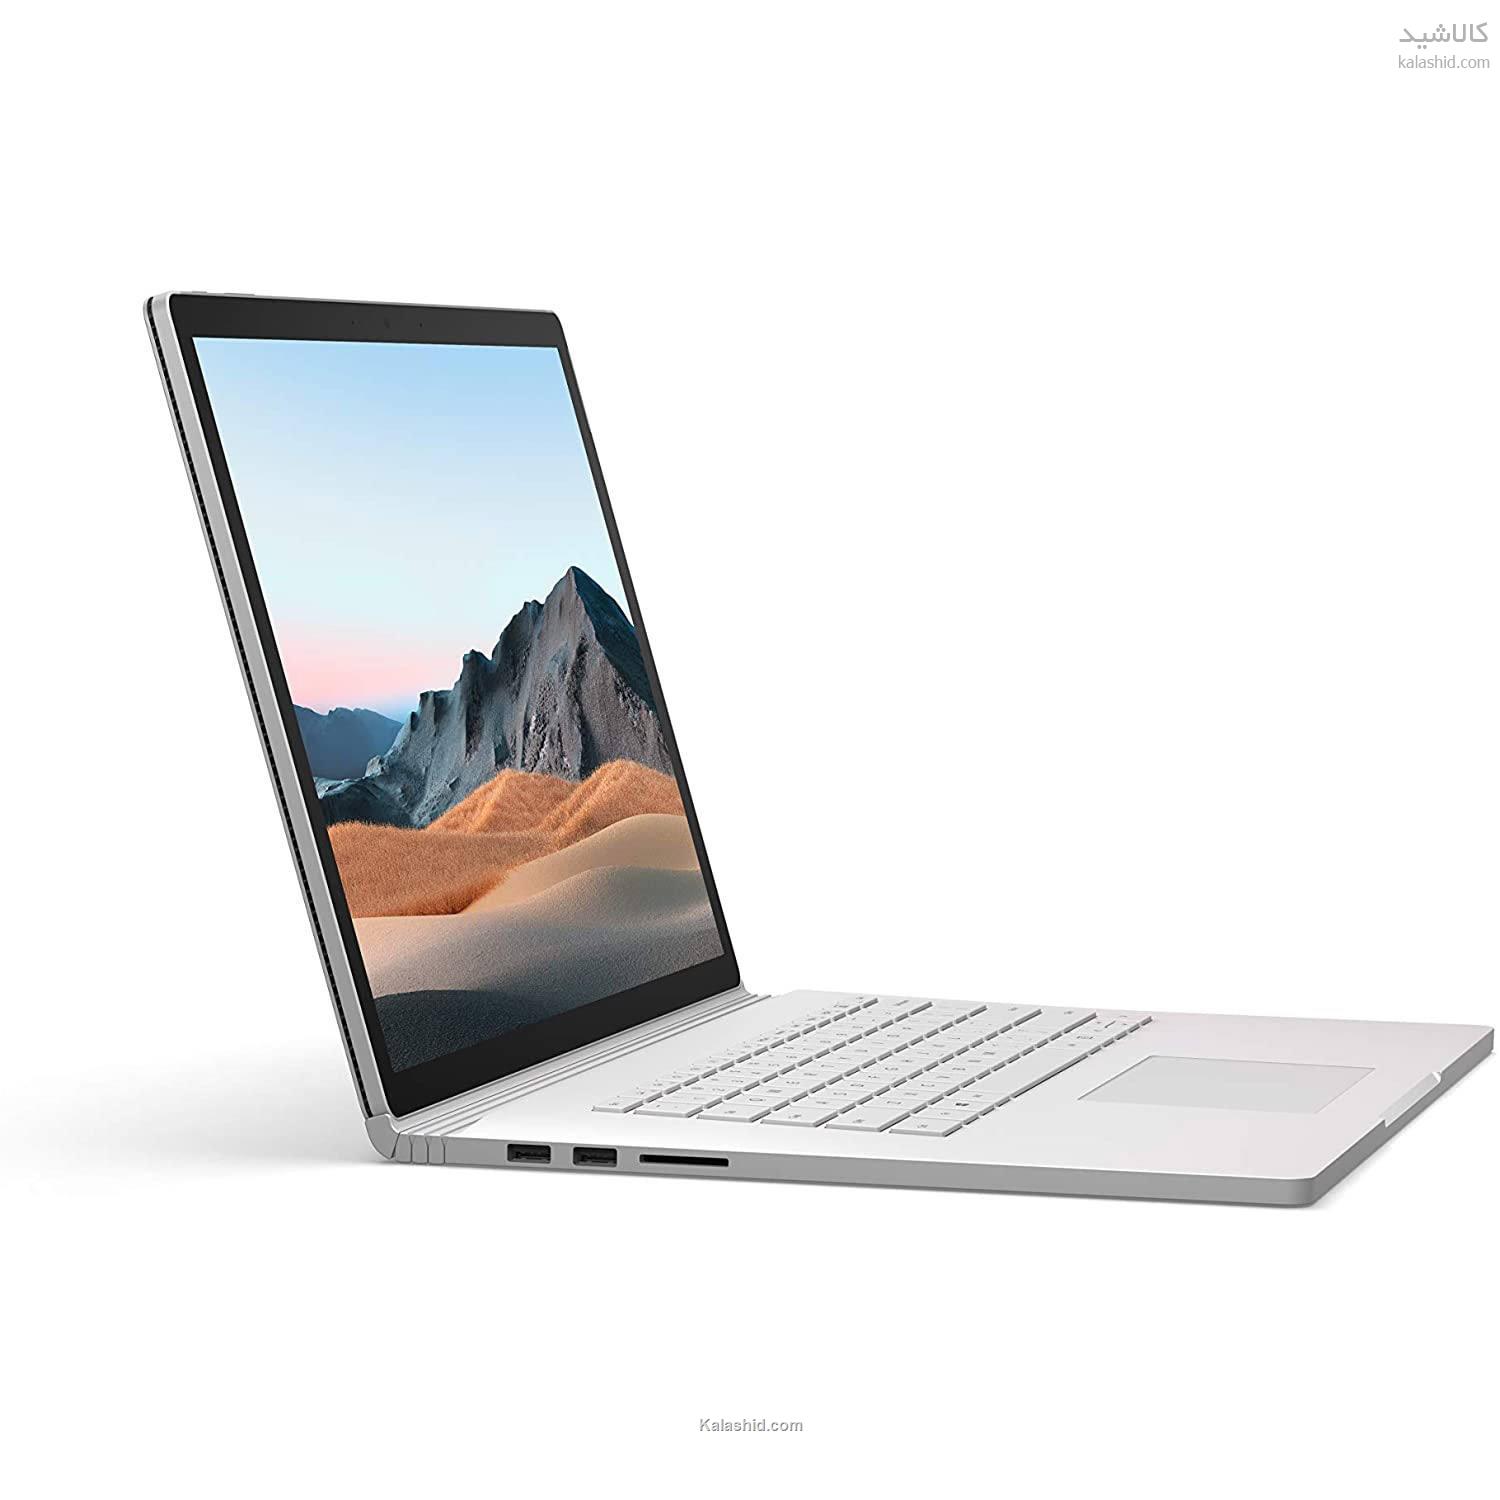 قیمت لپ تاپ 13 اینچی مایکروسافت Surface Book 3 Ram 8 GB